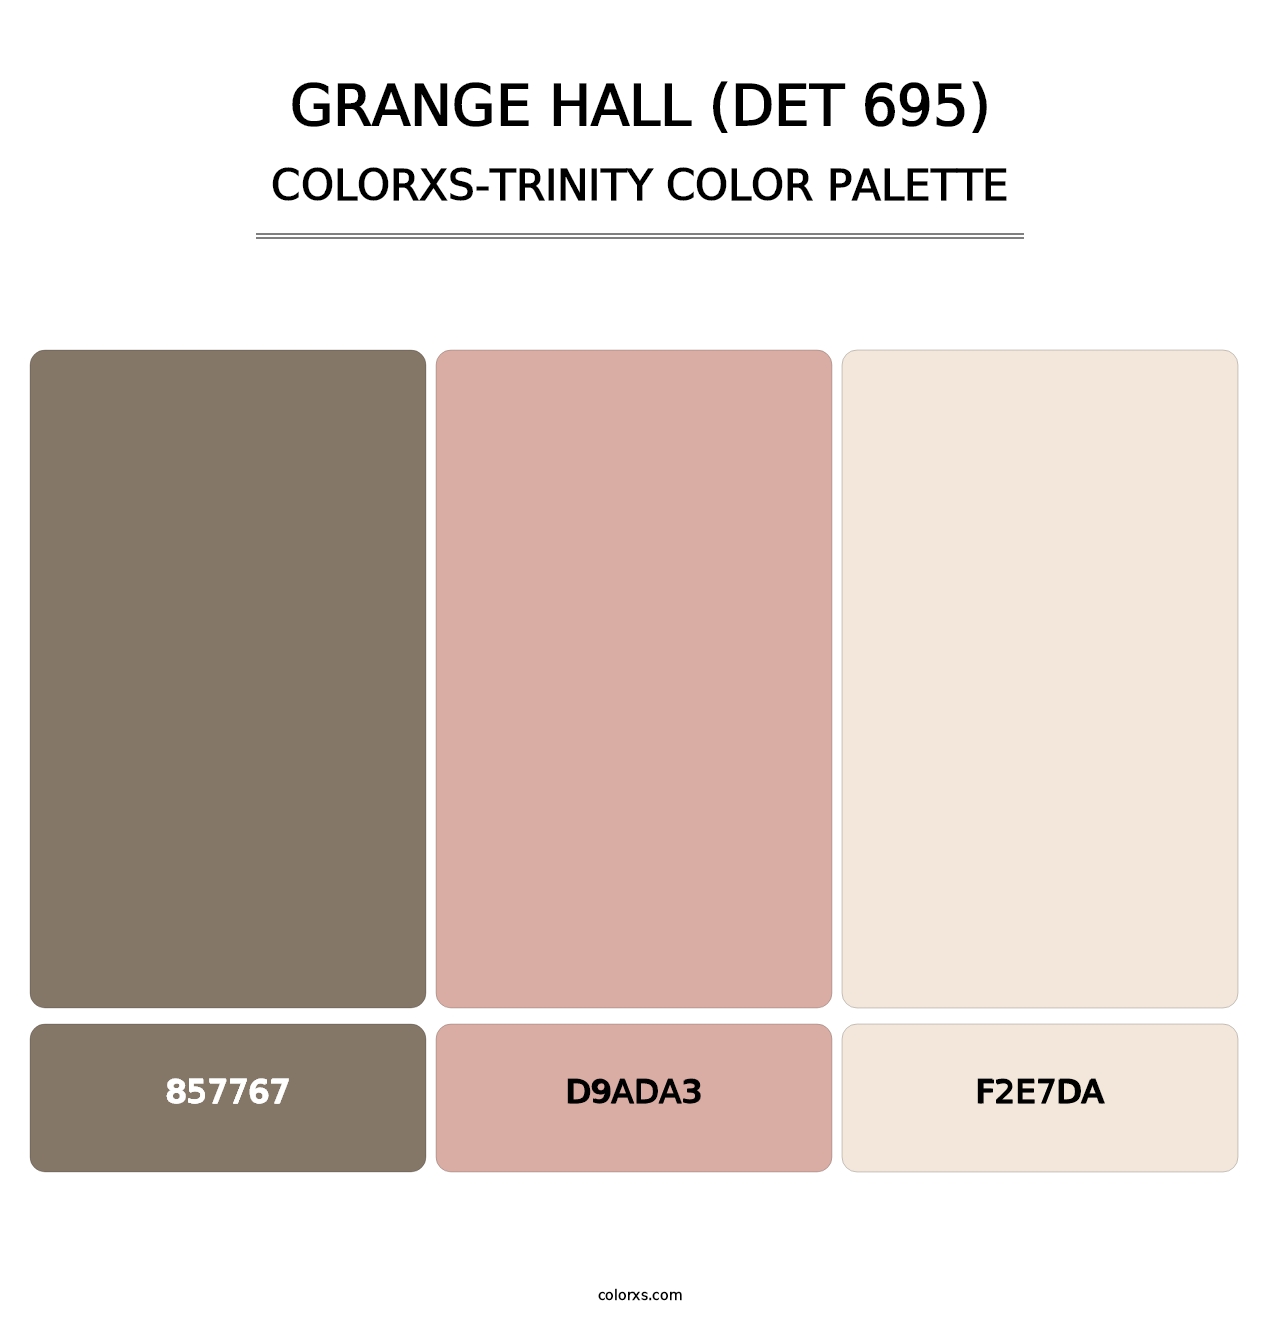 Grange Hall (DET 695) - Colorxs Trinity Palette